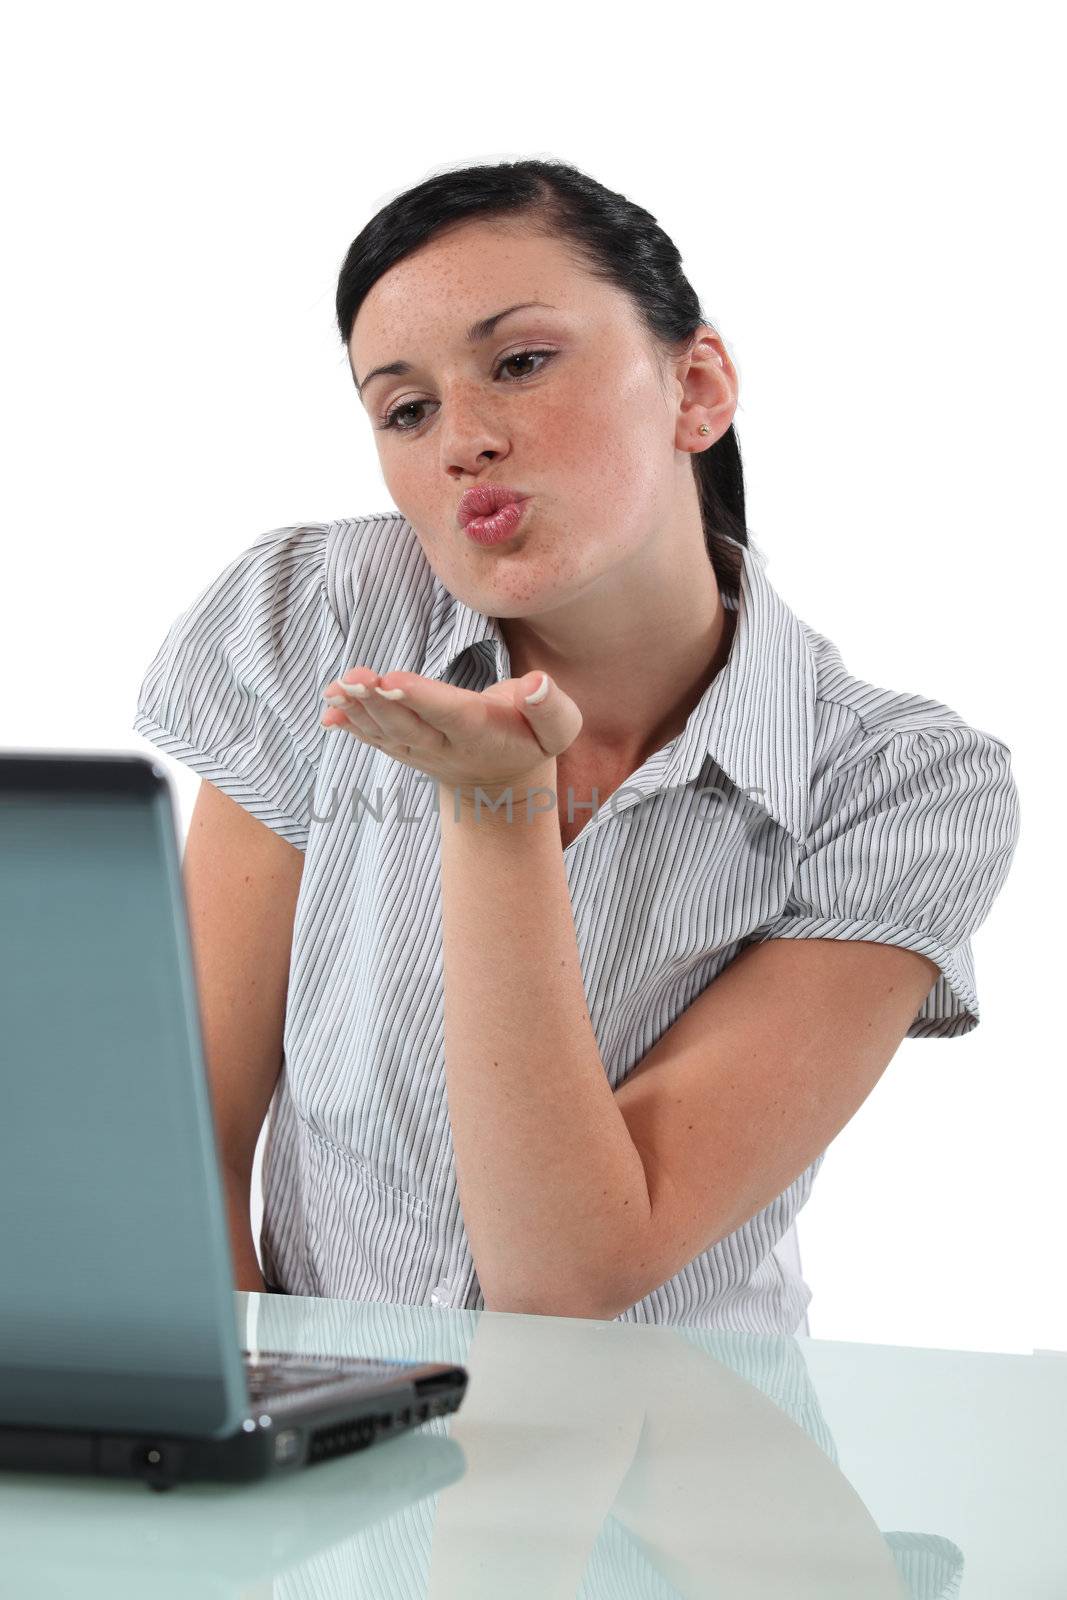 Young woman sending kisses through webcam by phovoir